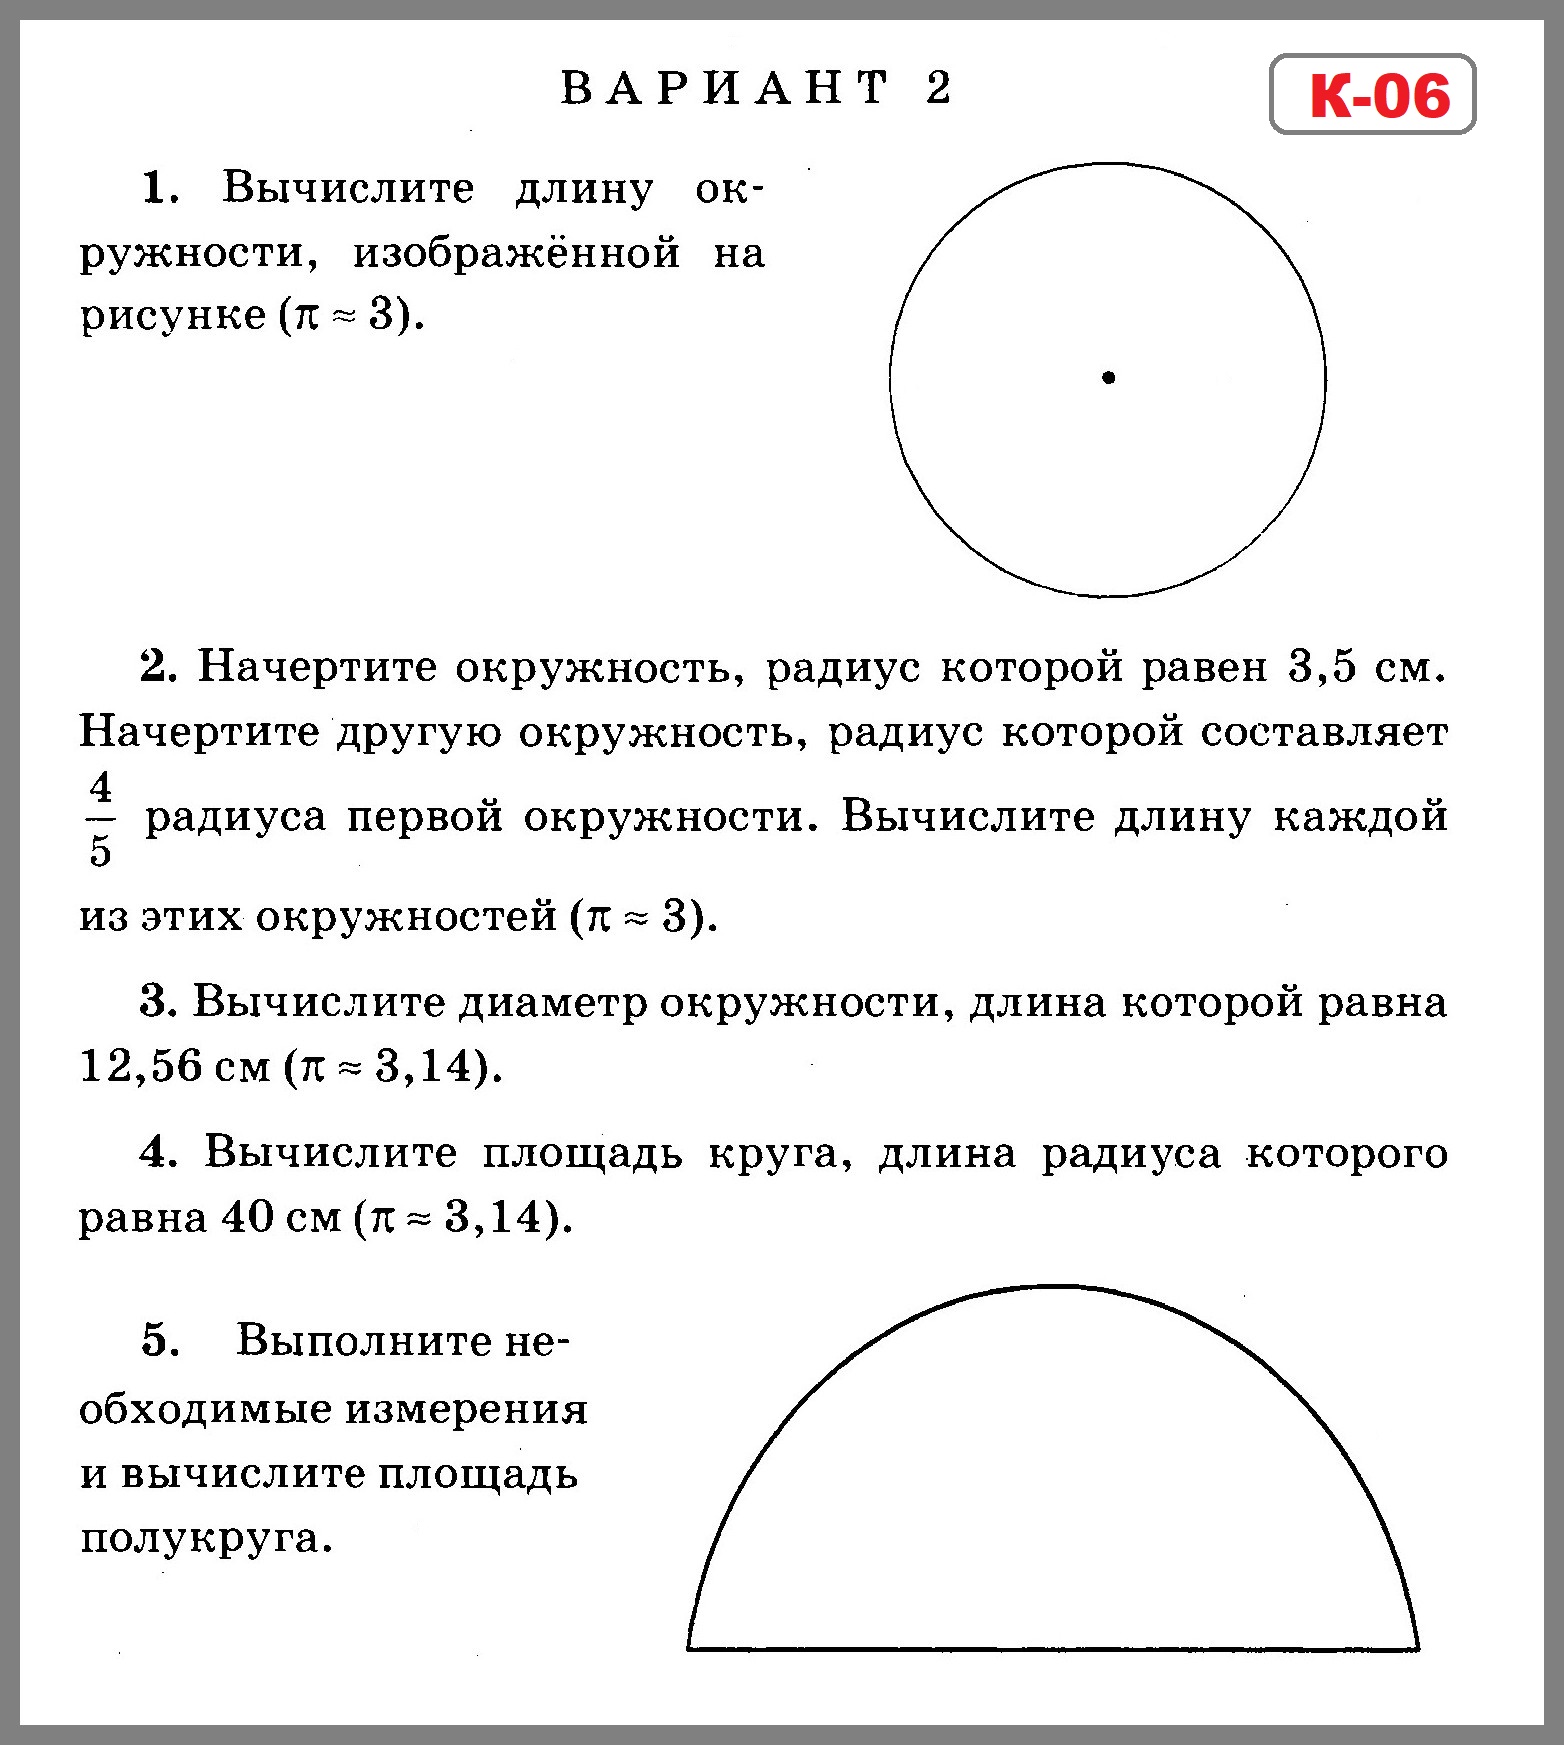 Задачи на круг 6 класс. Тест по теме длина окружности и площадь круга 9 класс. Длина окружности и площадь круга 6 класс задания. Длина окружности и площадь круга матем 6 класс. Математика 6 класс тема длина окружности и площадь круга.